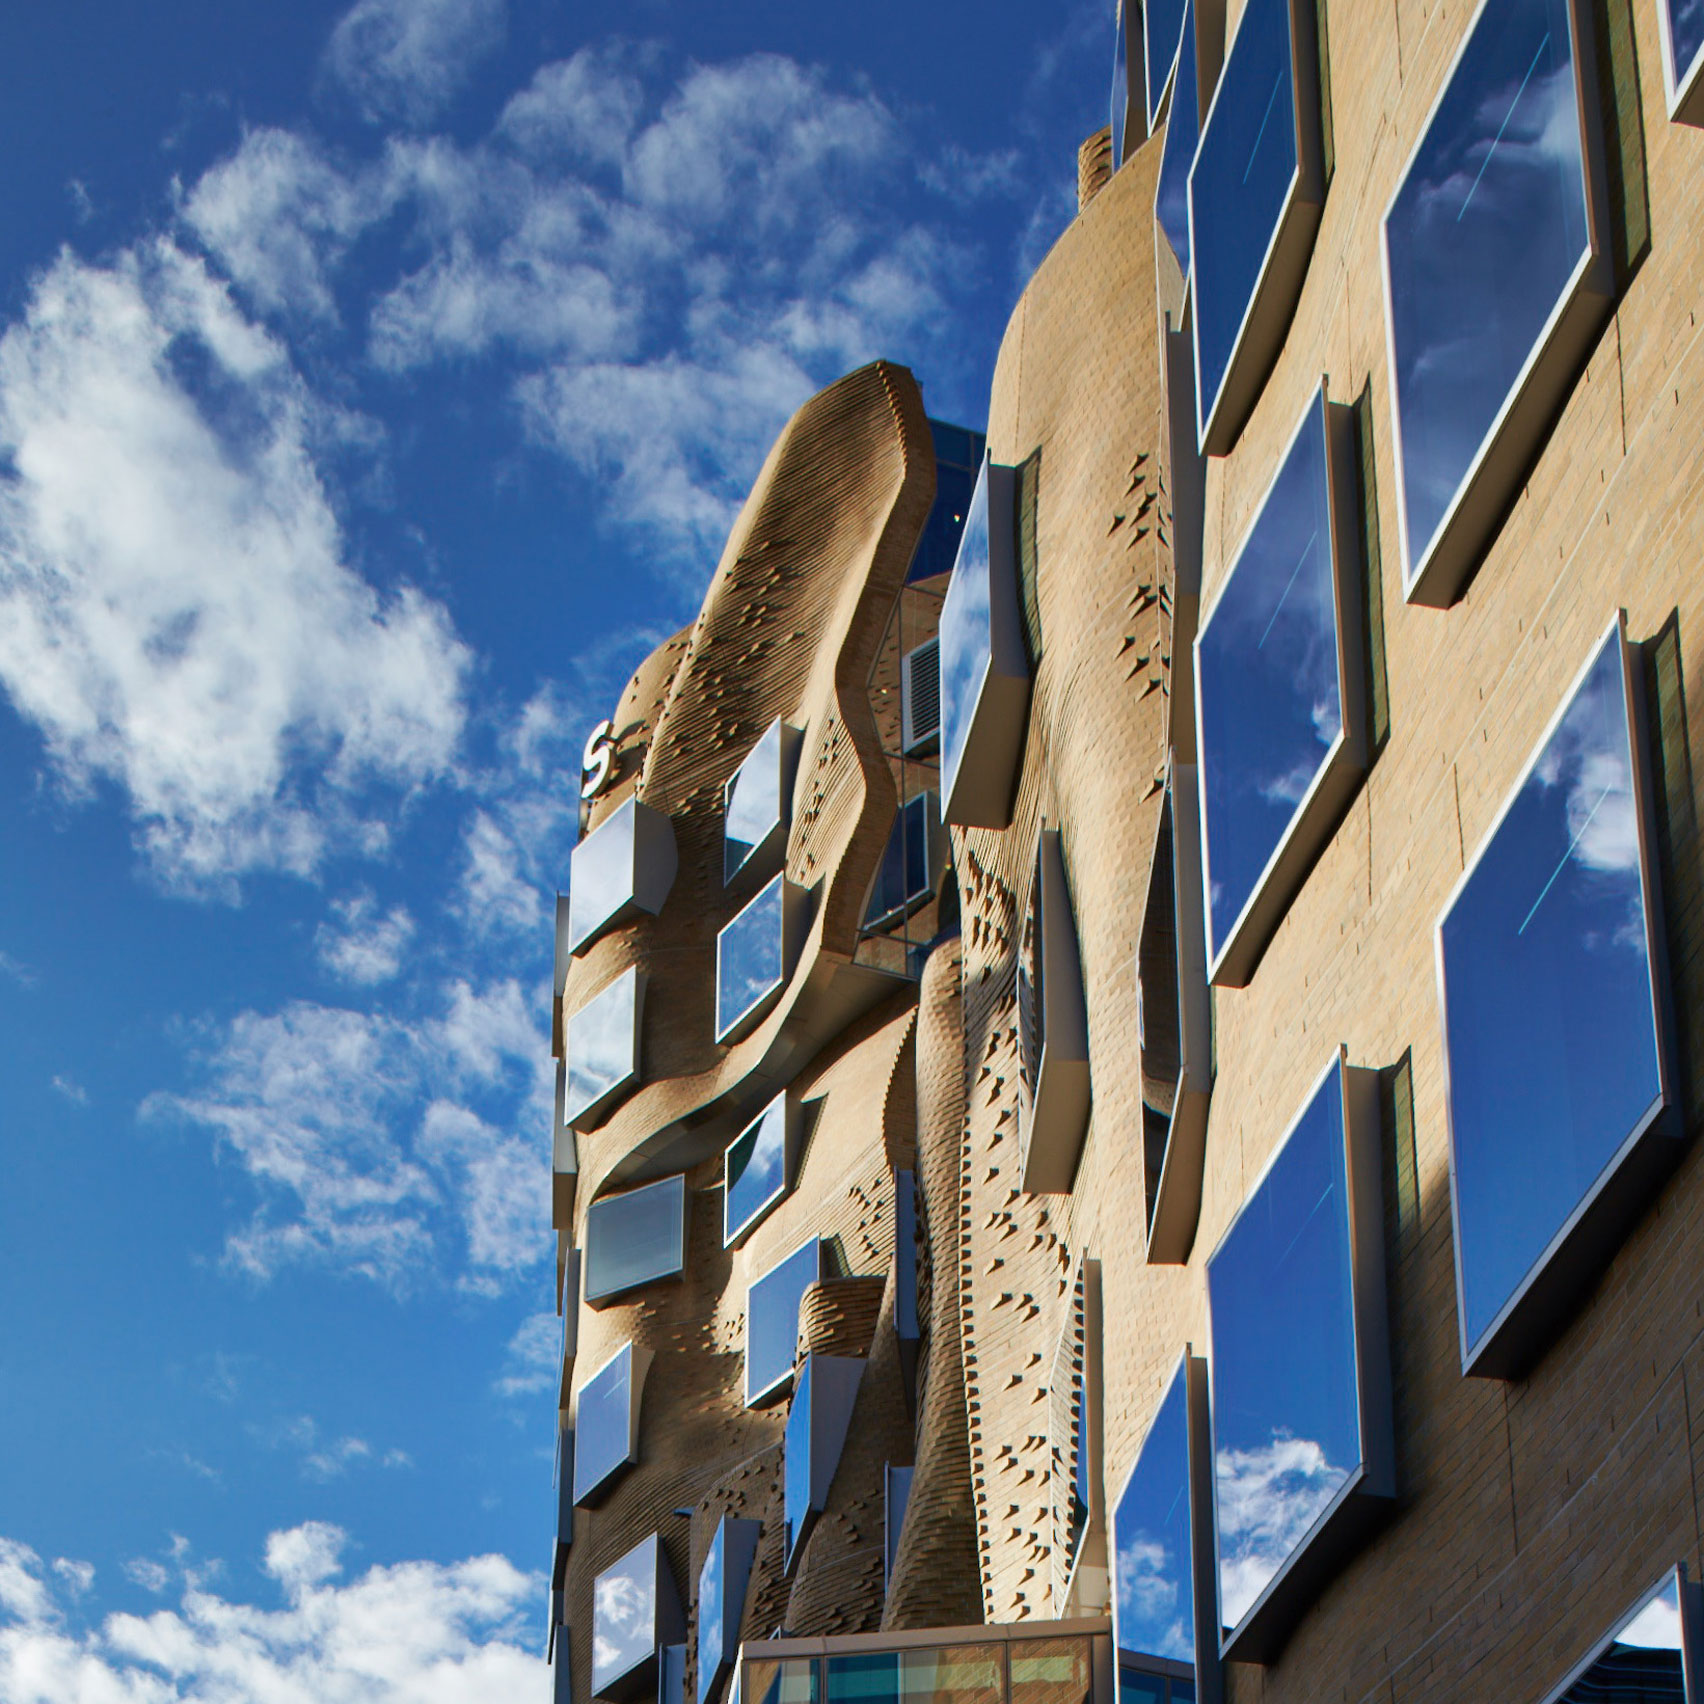 Bon voyage: Frank Gehry Hon RA's new building, Blog